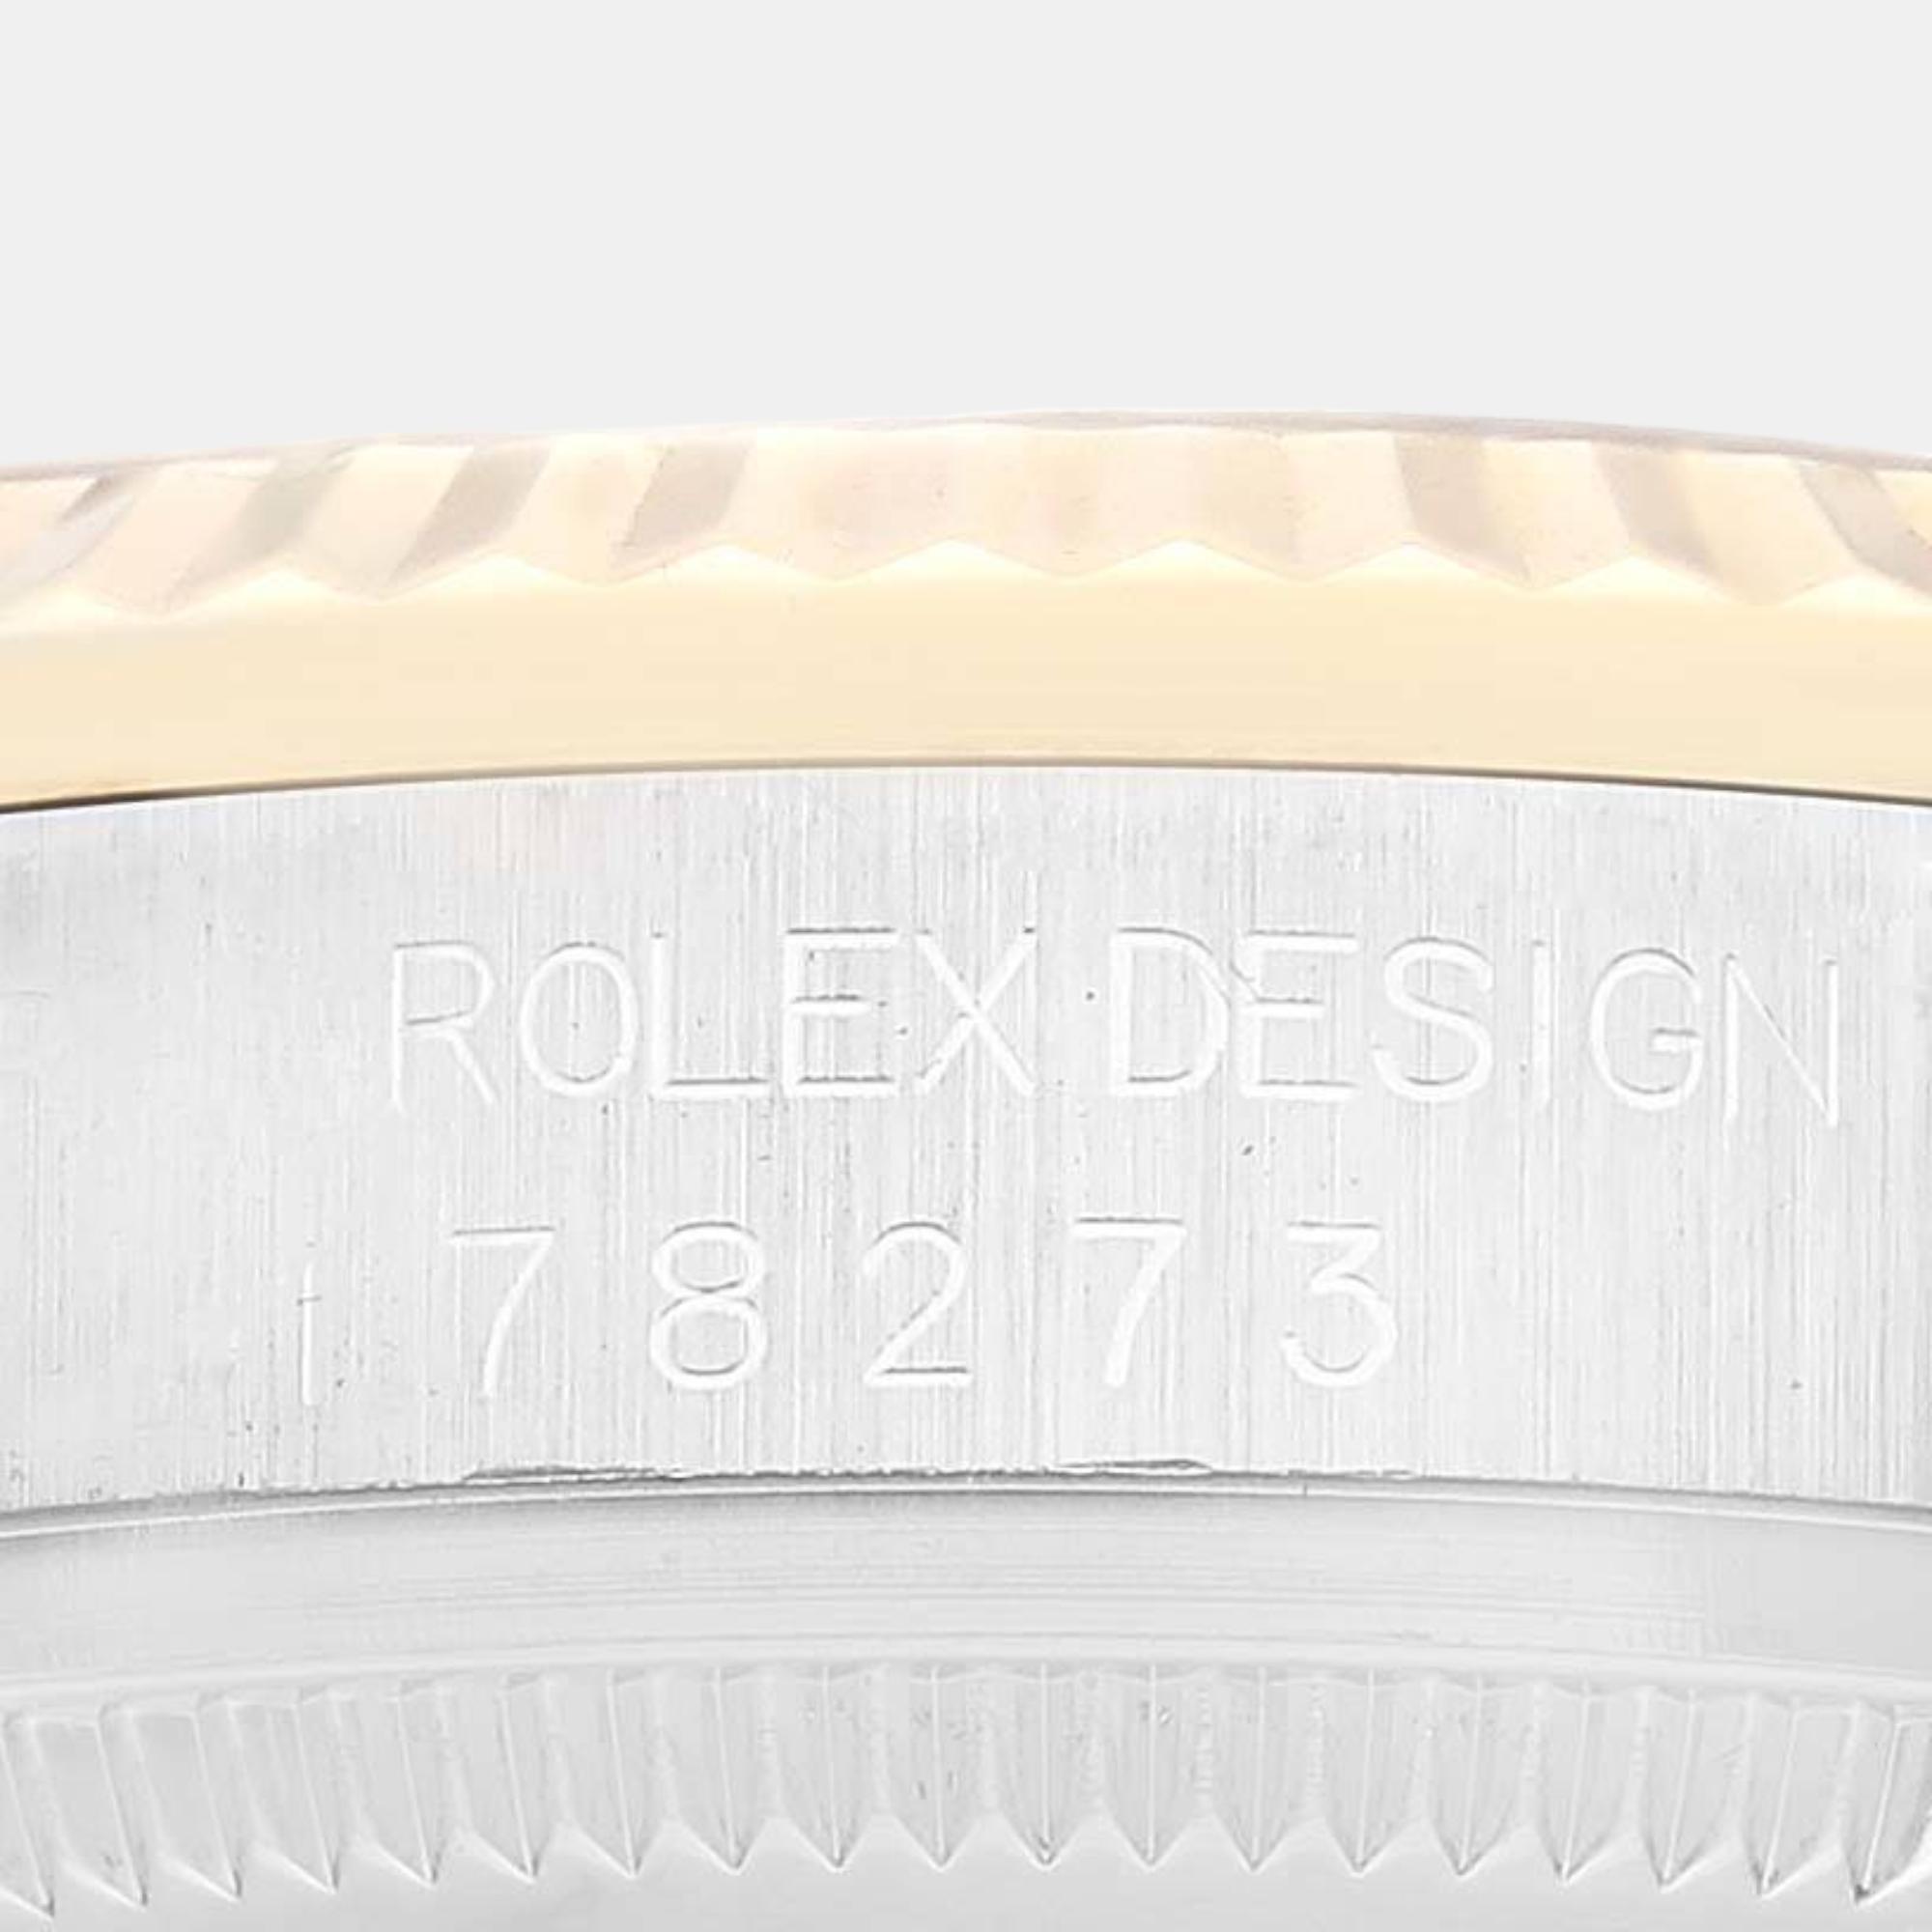 Rolex Datejust Midsize Steel Yellow Gold Ladies Watch 178273